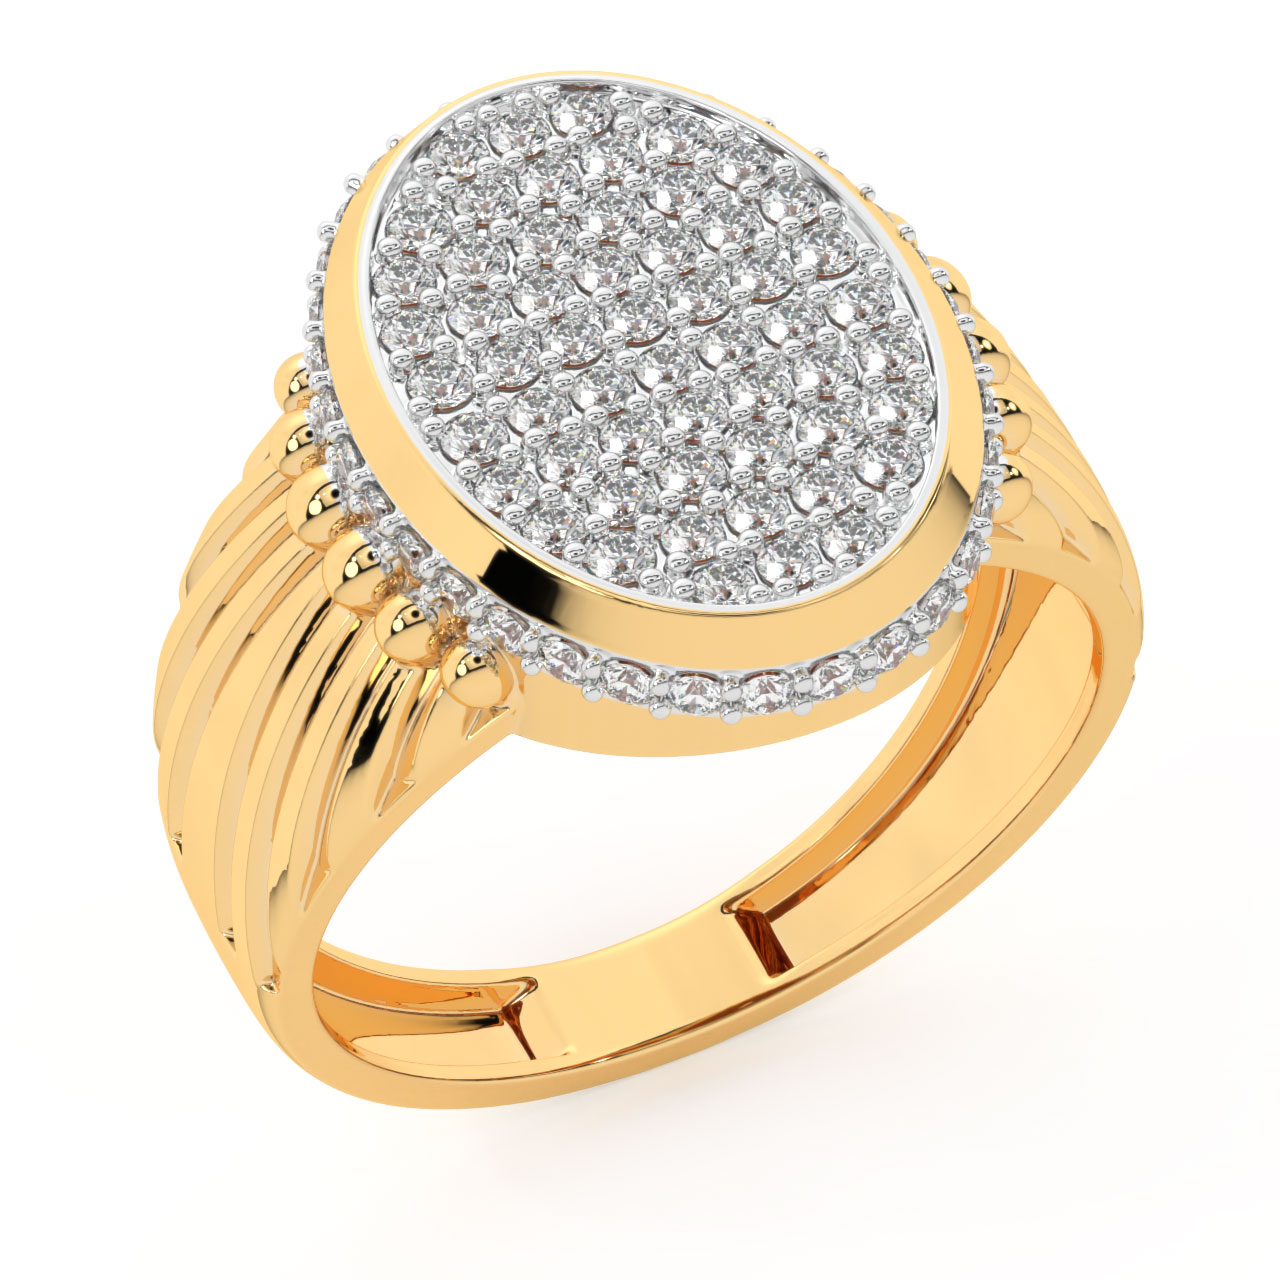 Wesley Round Diamond Ring For Men